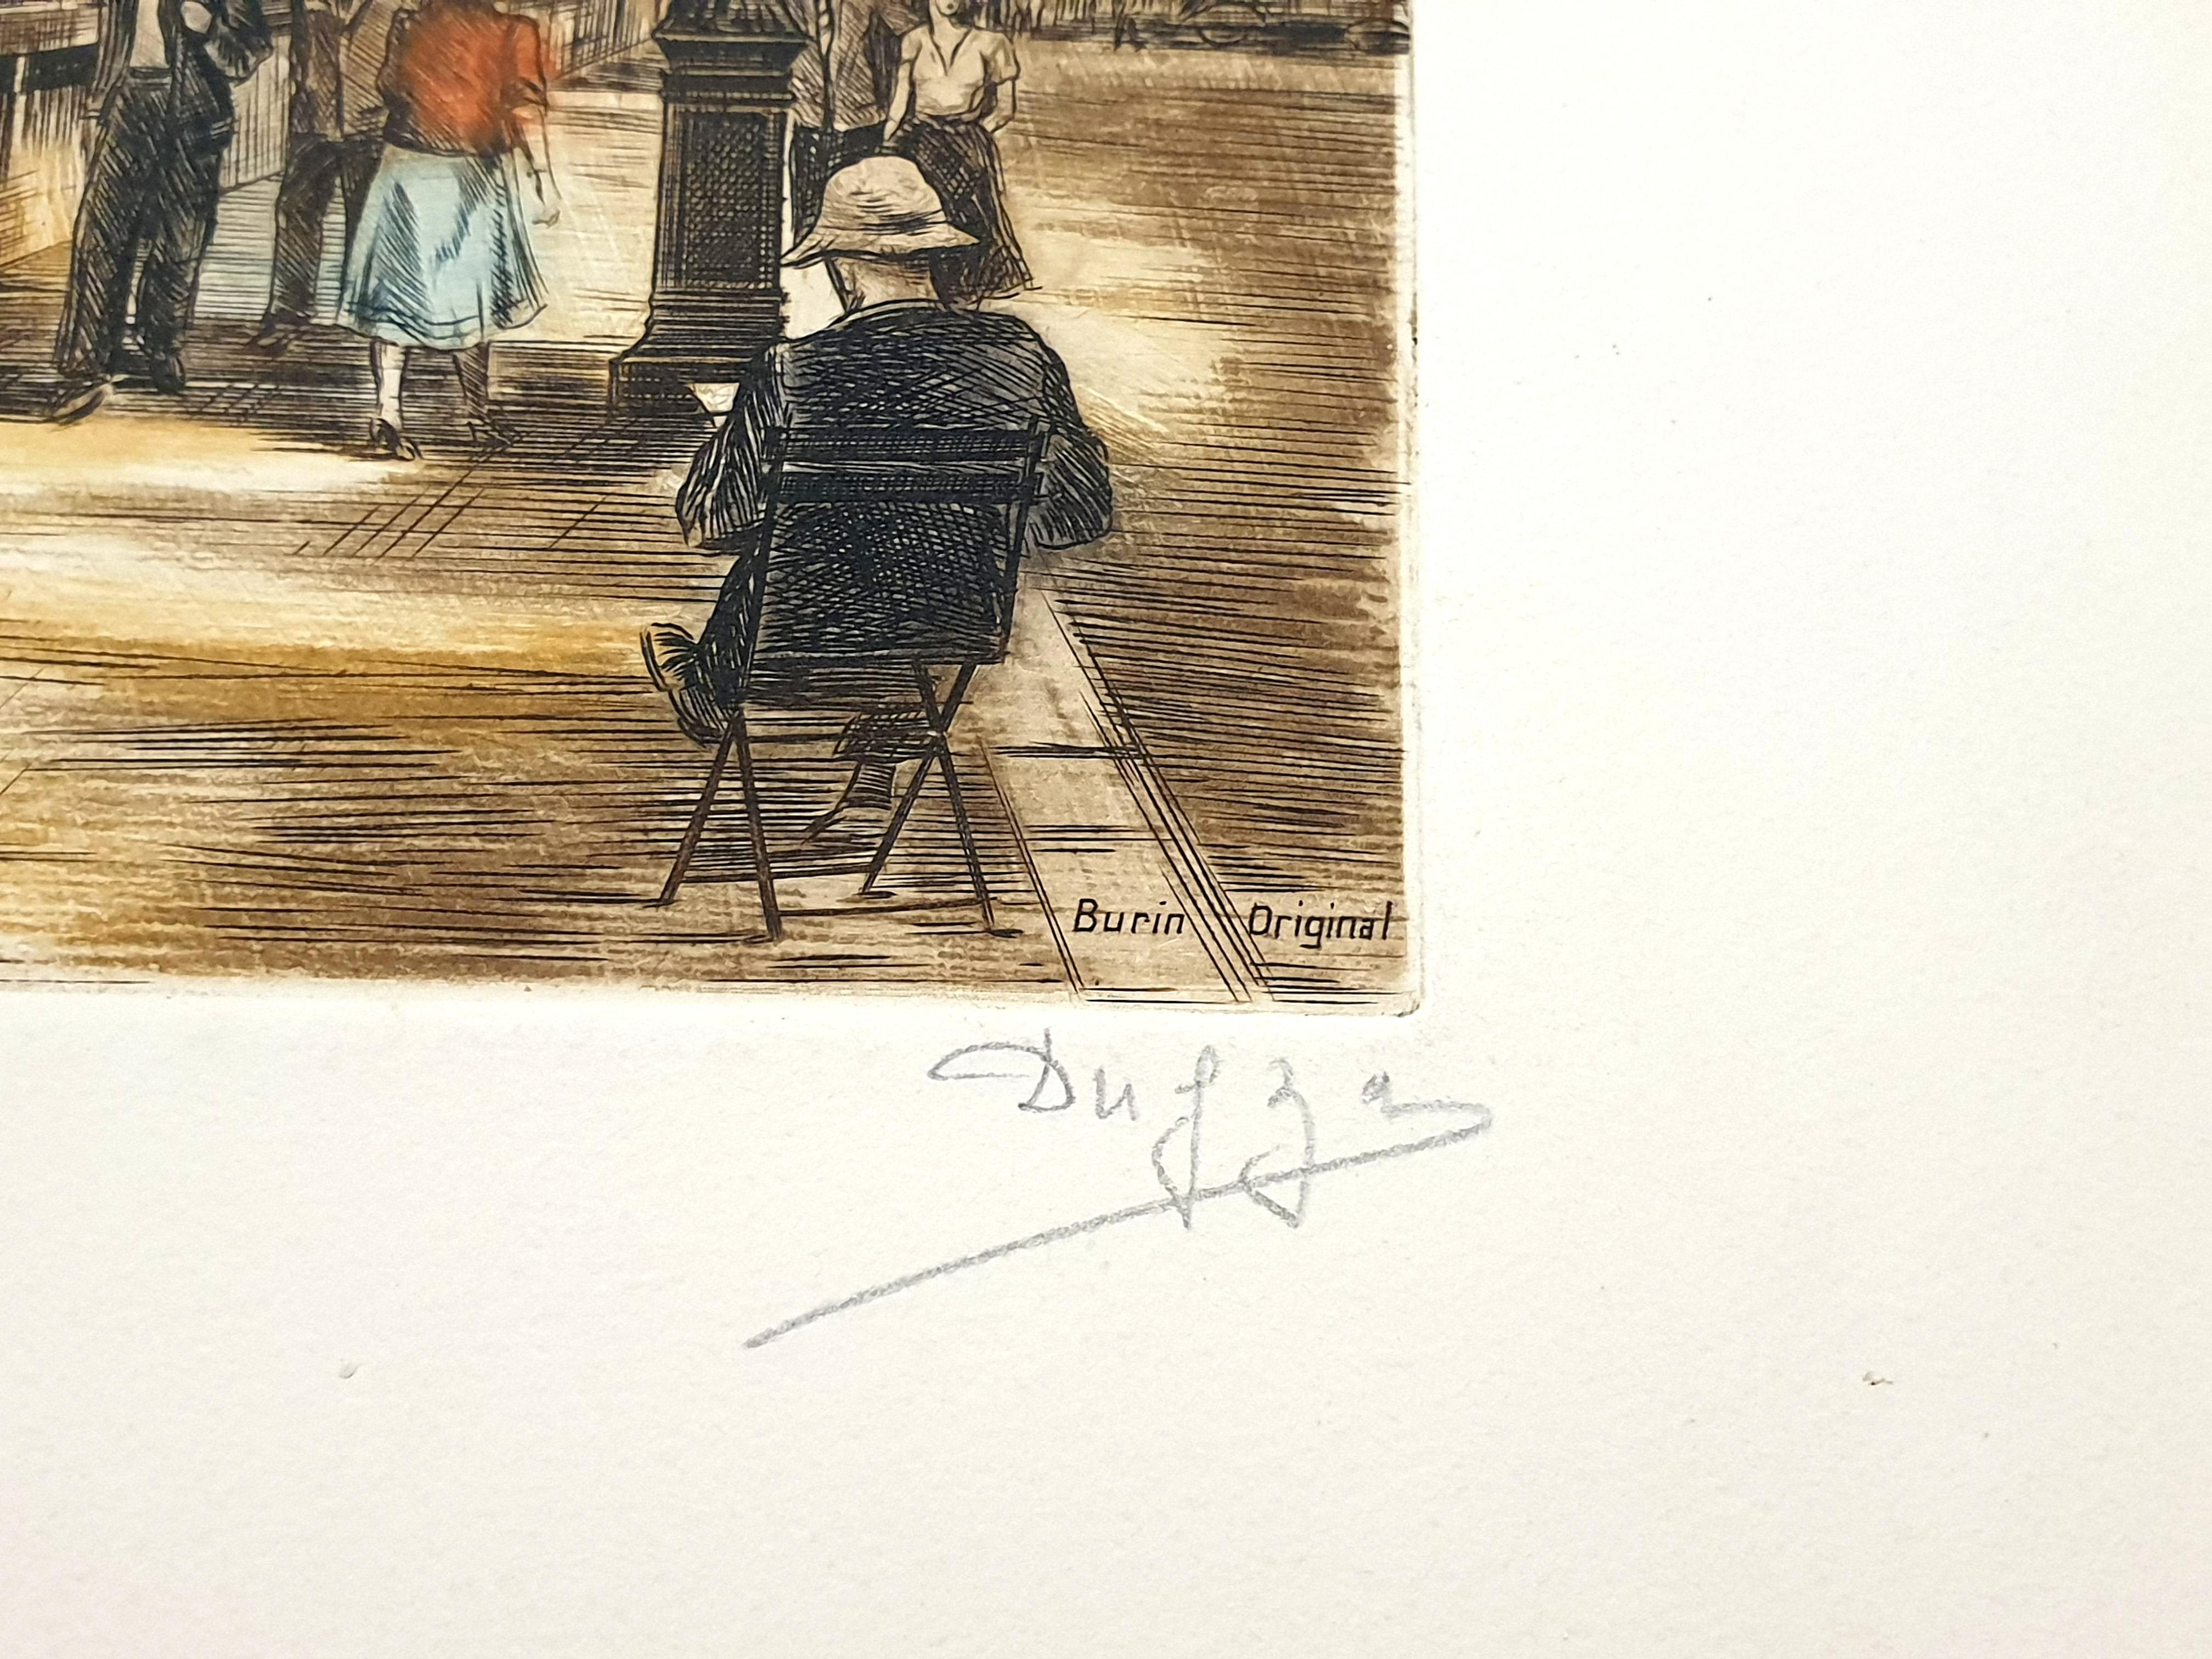 Dufza - Paris - Quai des Grands Augustins - Original Handsigned Etching
Circa 1940
Handsigned in pencil
Dimensions: 20 x 25 cm 